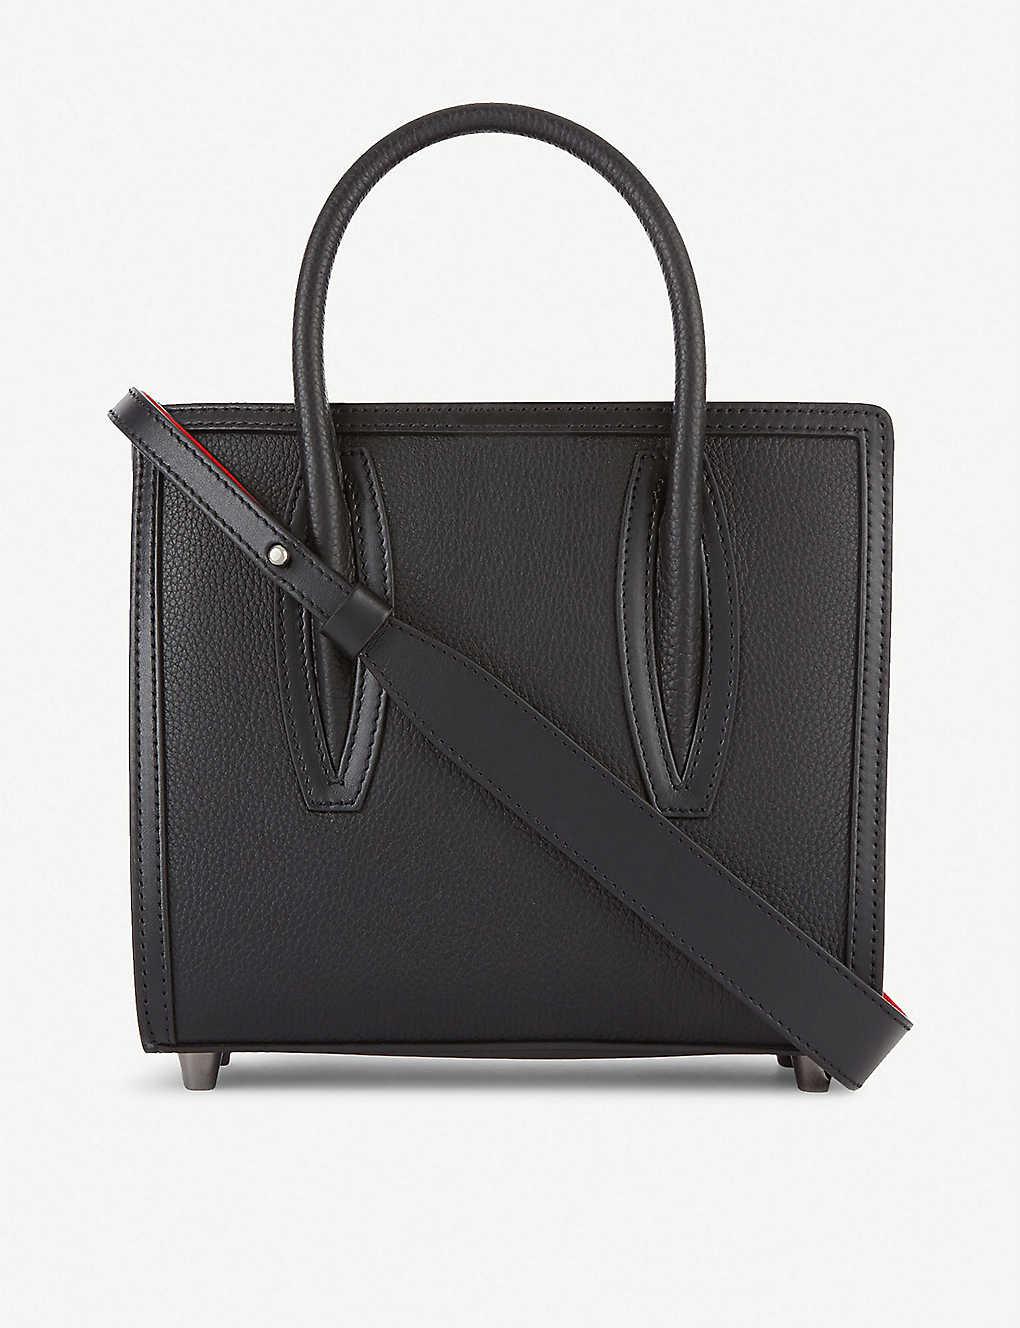 Christian Louboutin Paloma S Mini Leather Tote Bag in Black | Lyst